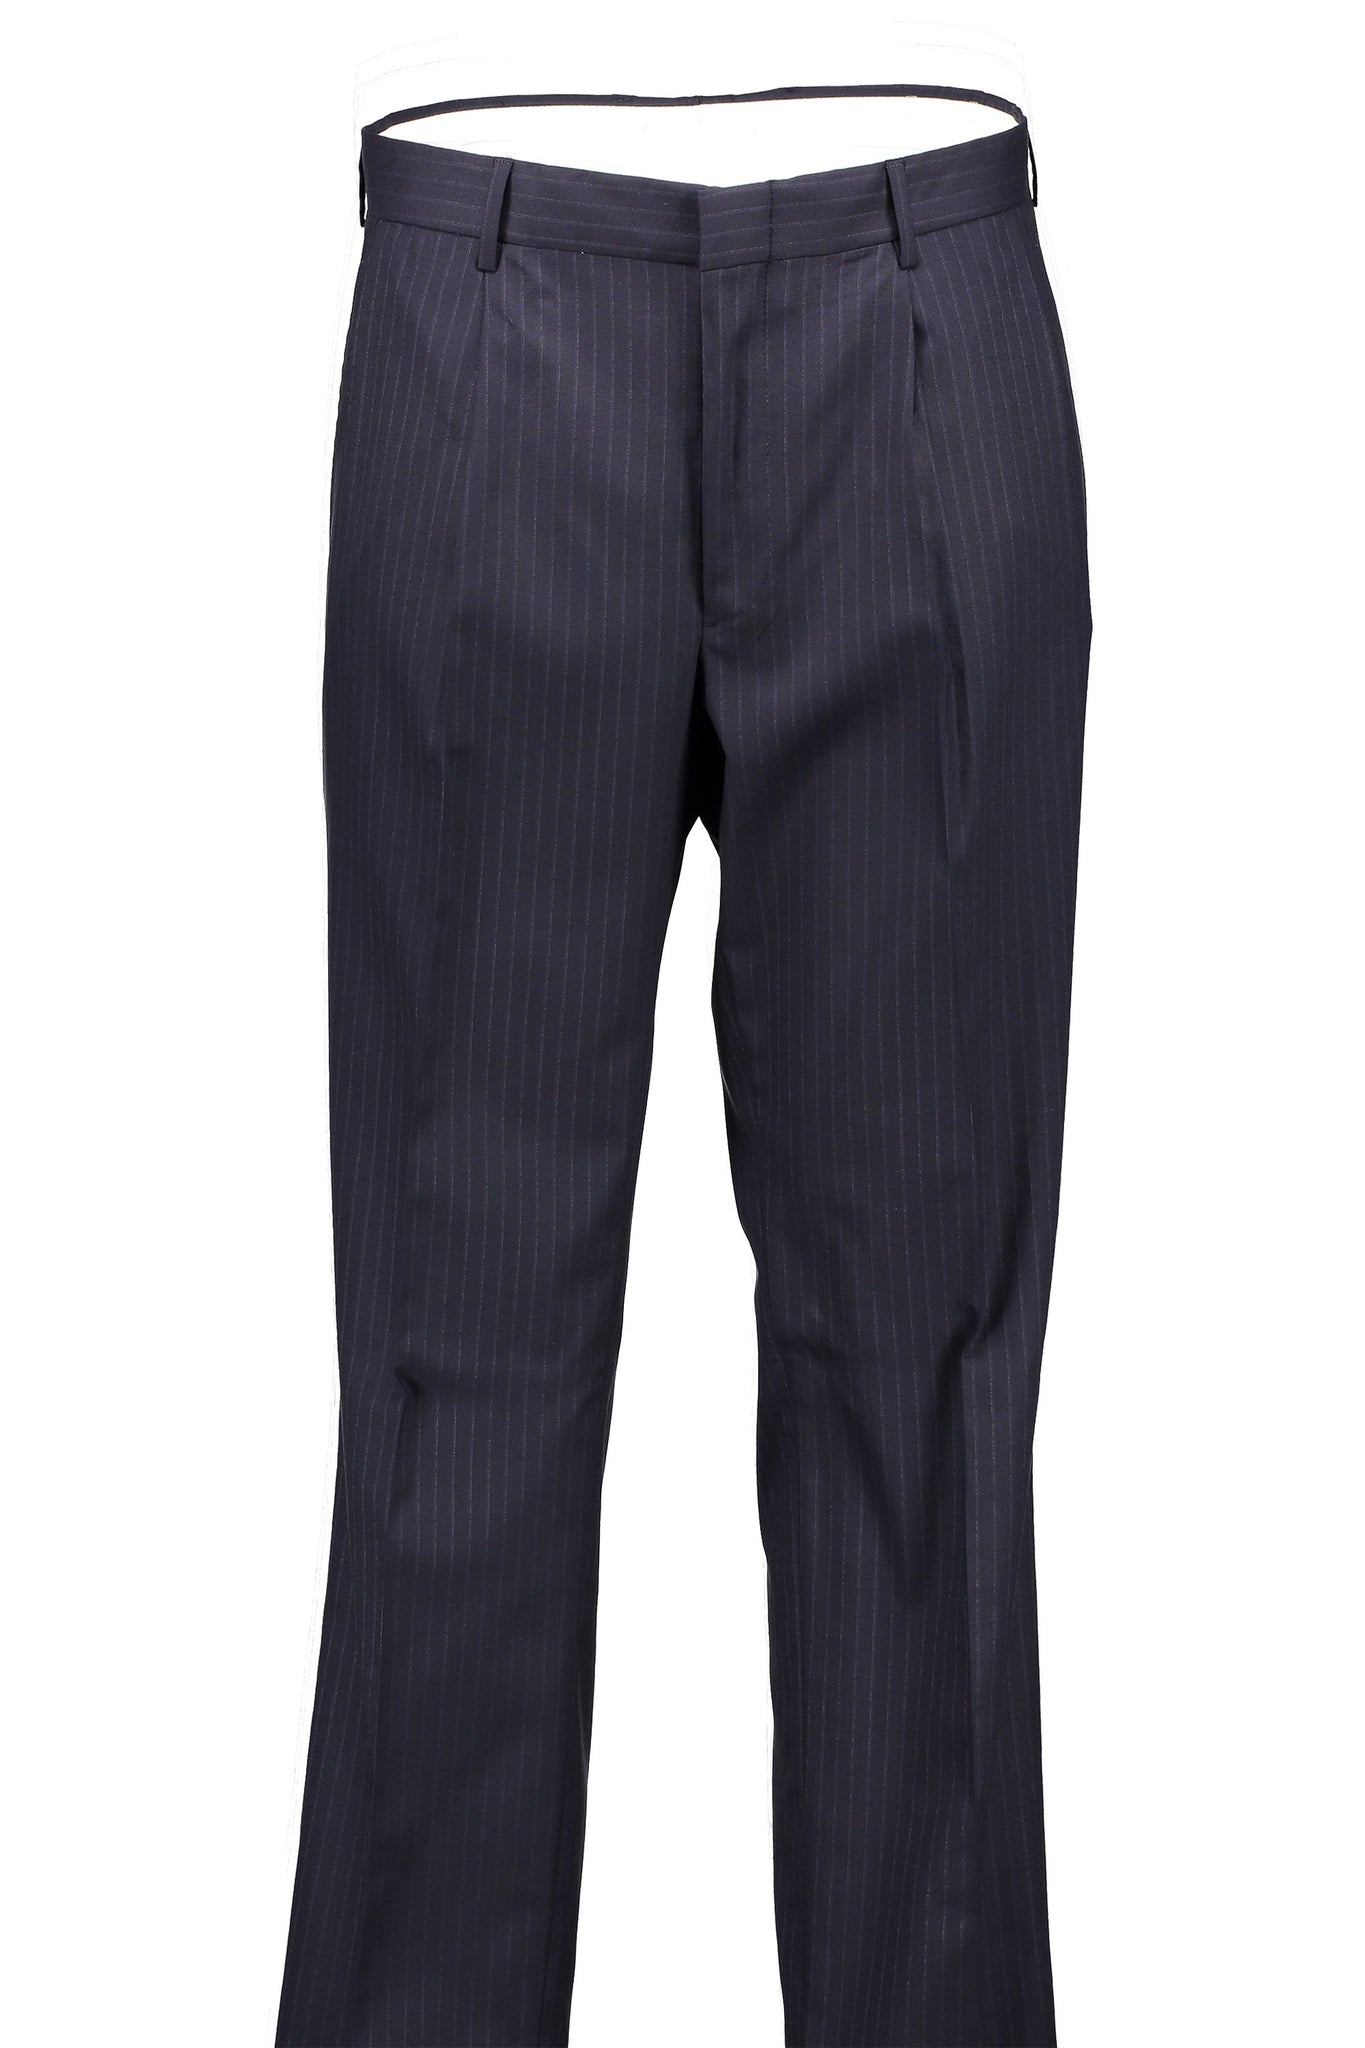 Men's Pleated Pant Classic Cut - NAVY STRIPE - 98/2 WOOL/LYCRA